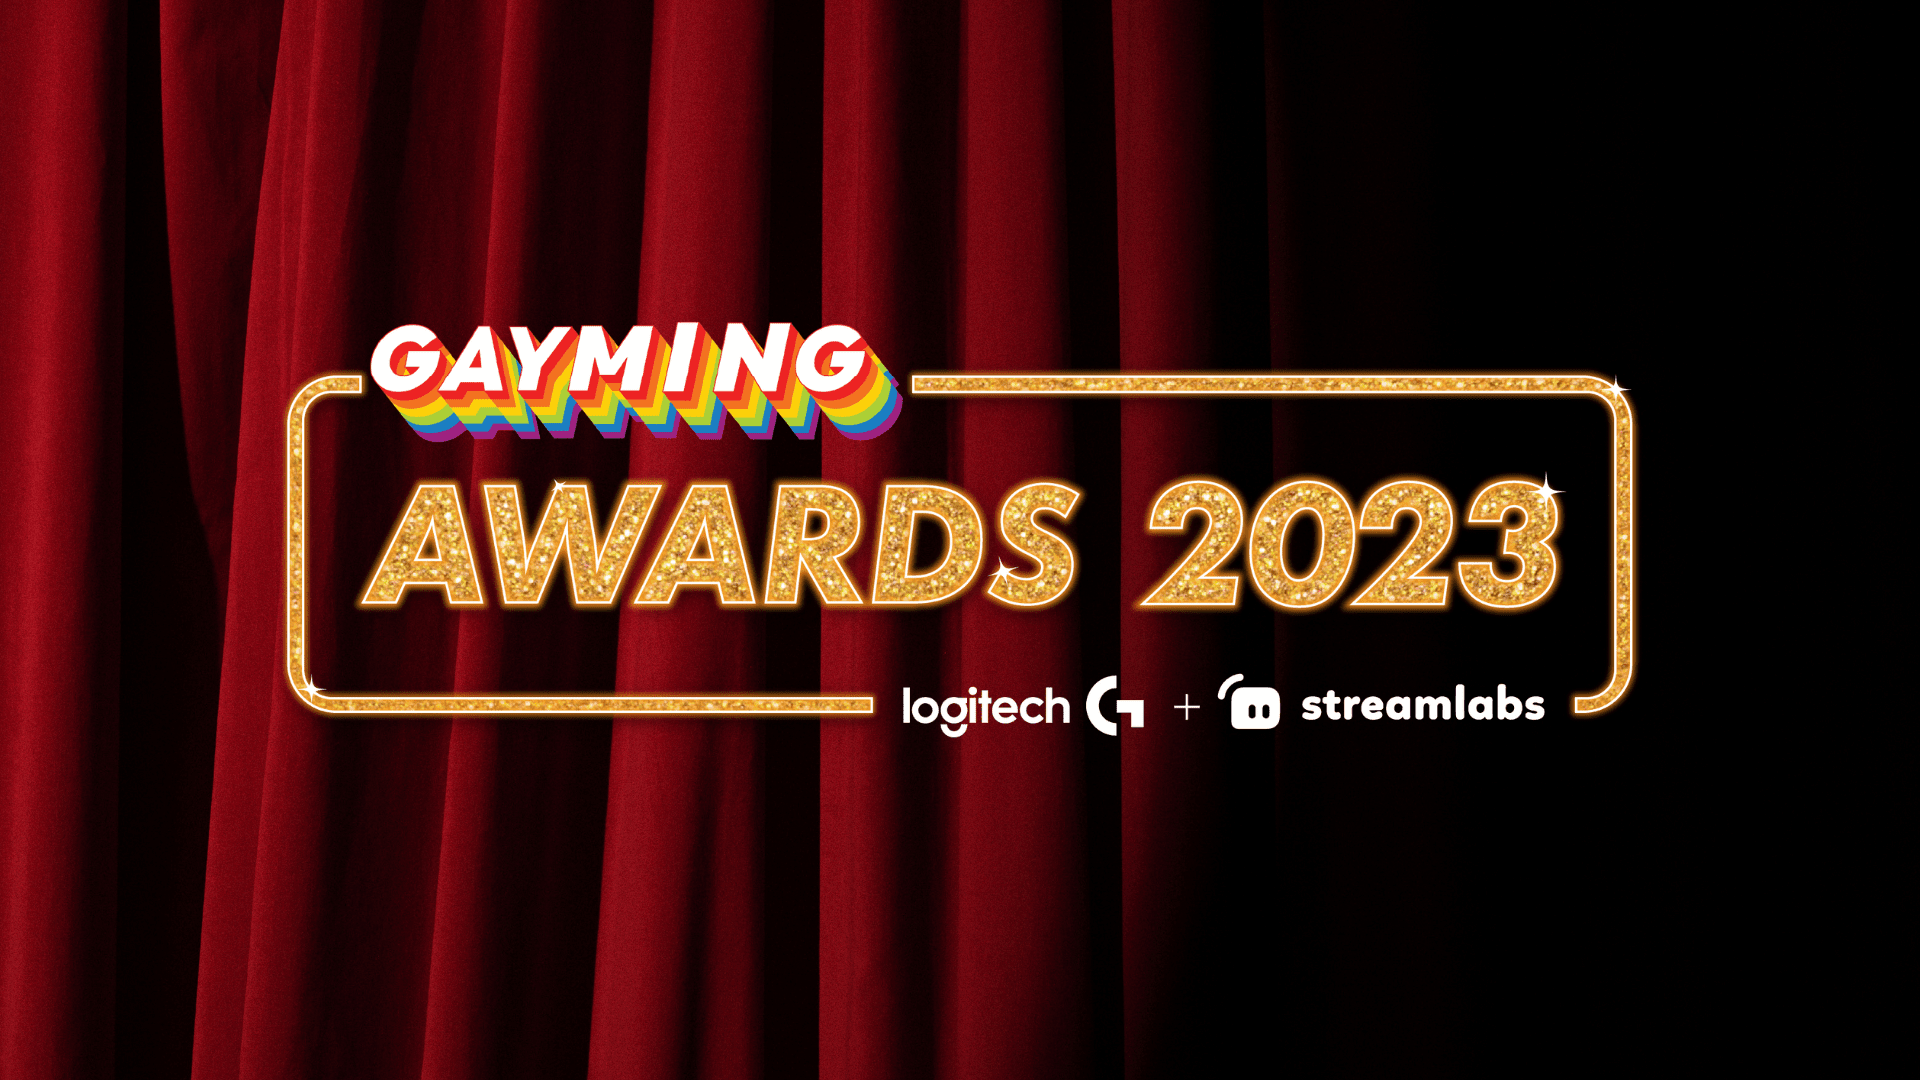 Gayming Awards 2023: Best LGBTQ Indie Game nominees - Gayming Magazine